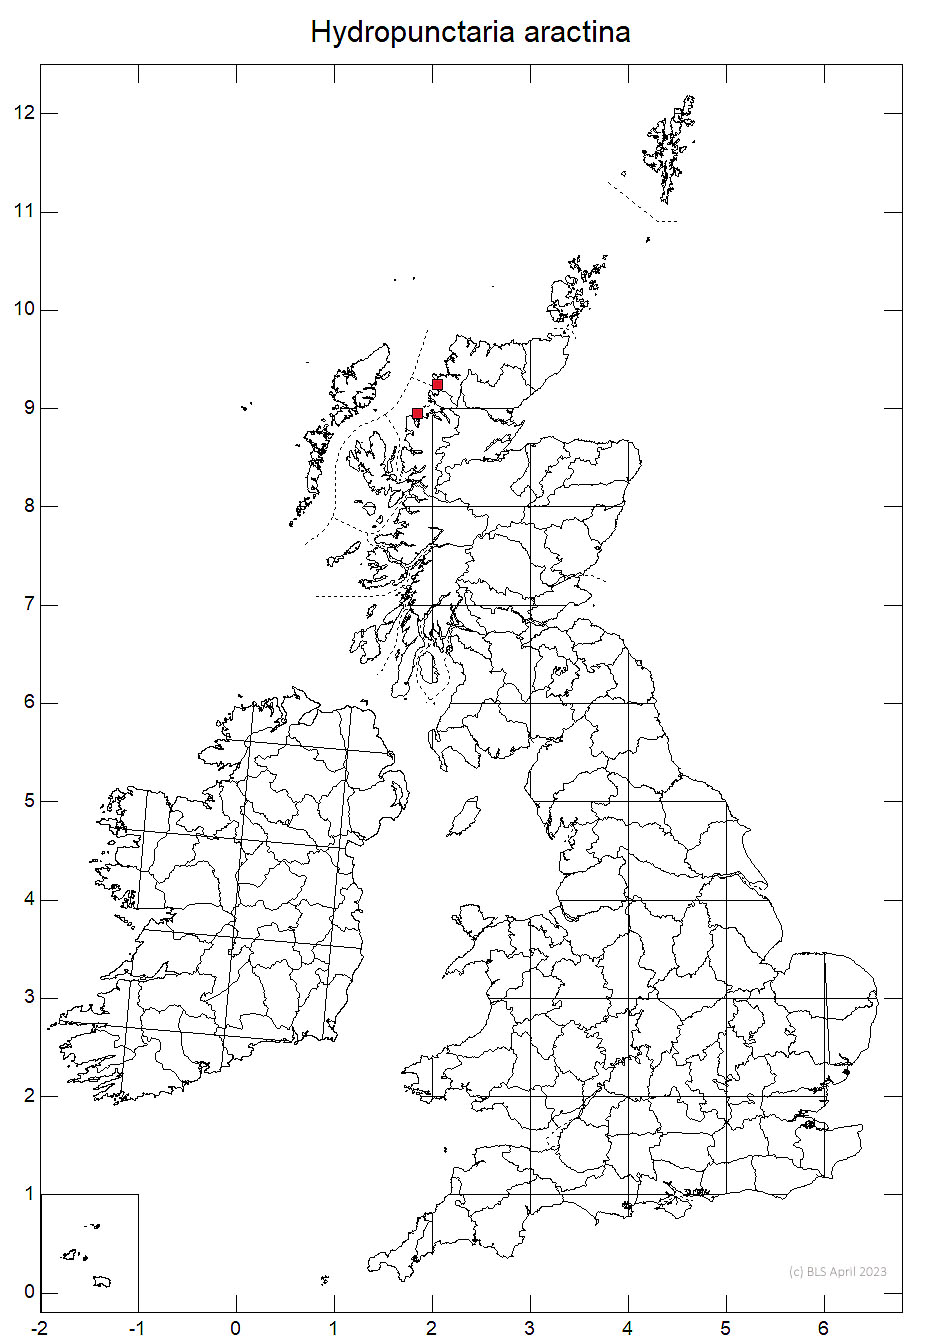 Hydropunctaria aractina 10km sq distribution map